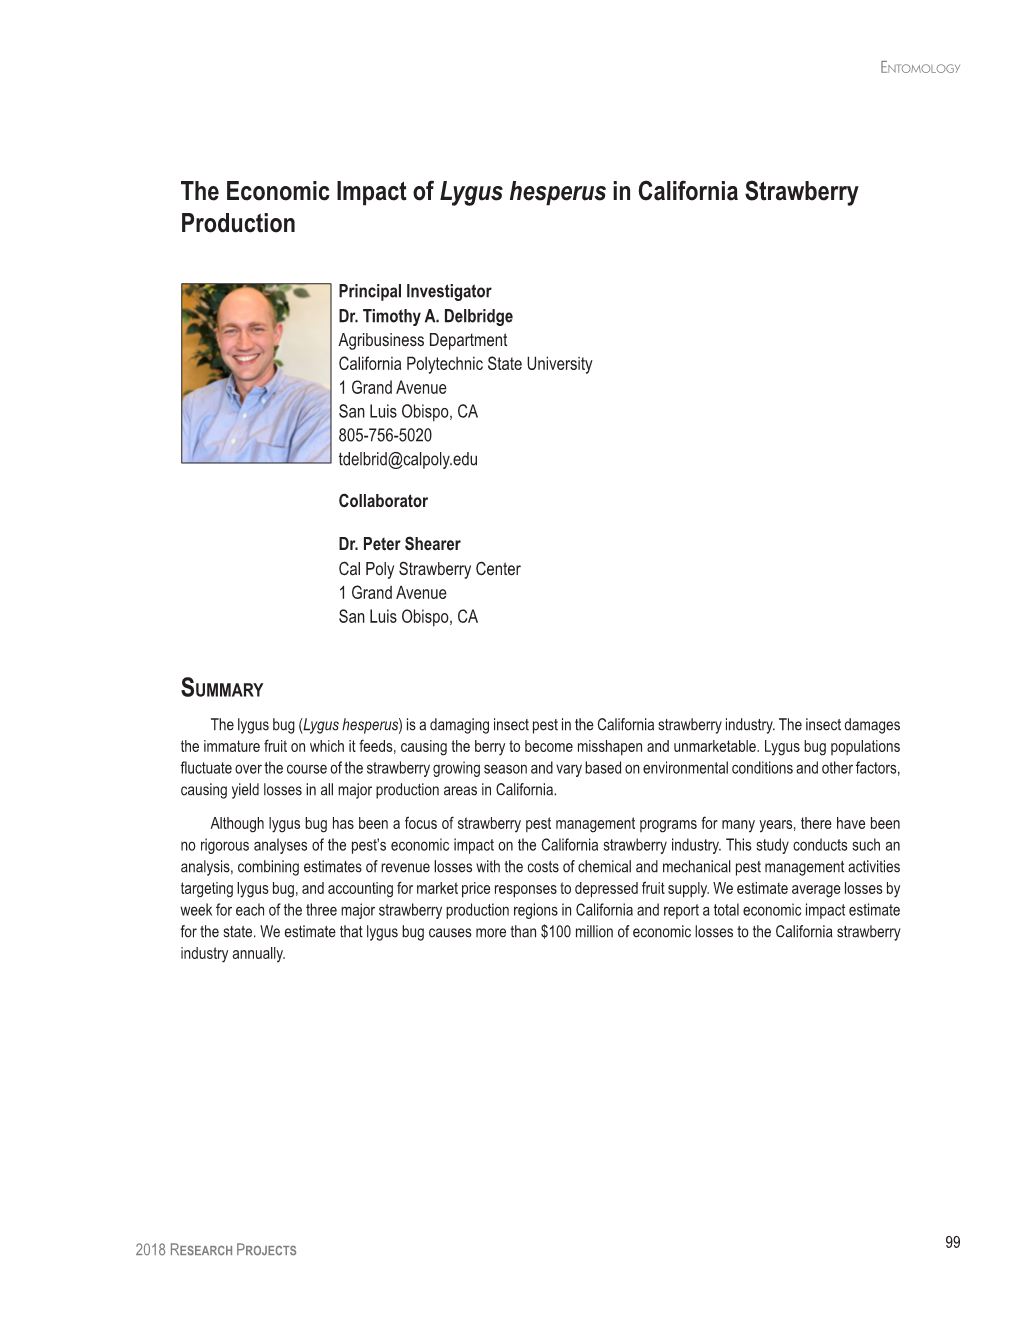 The Economic Impact of Lygus Hesperus in California Strawberry Production